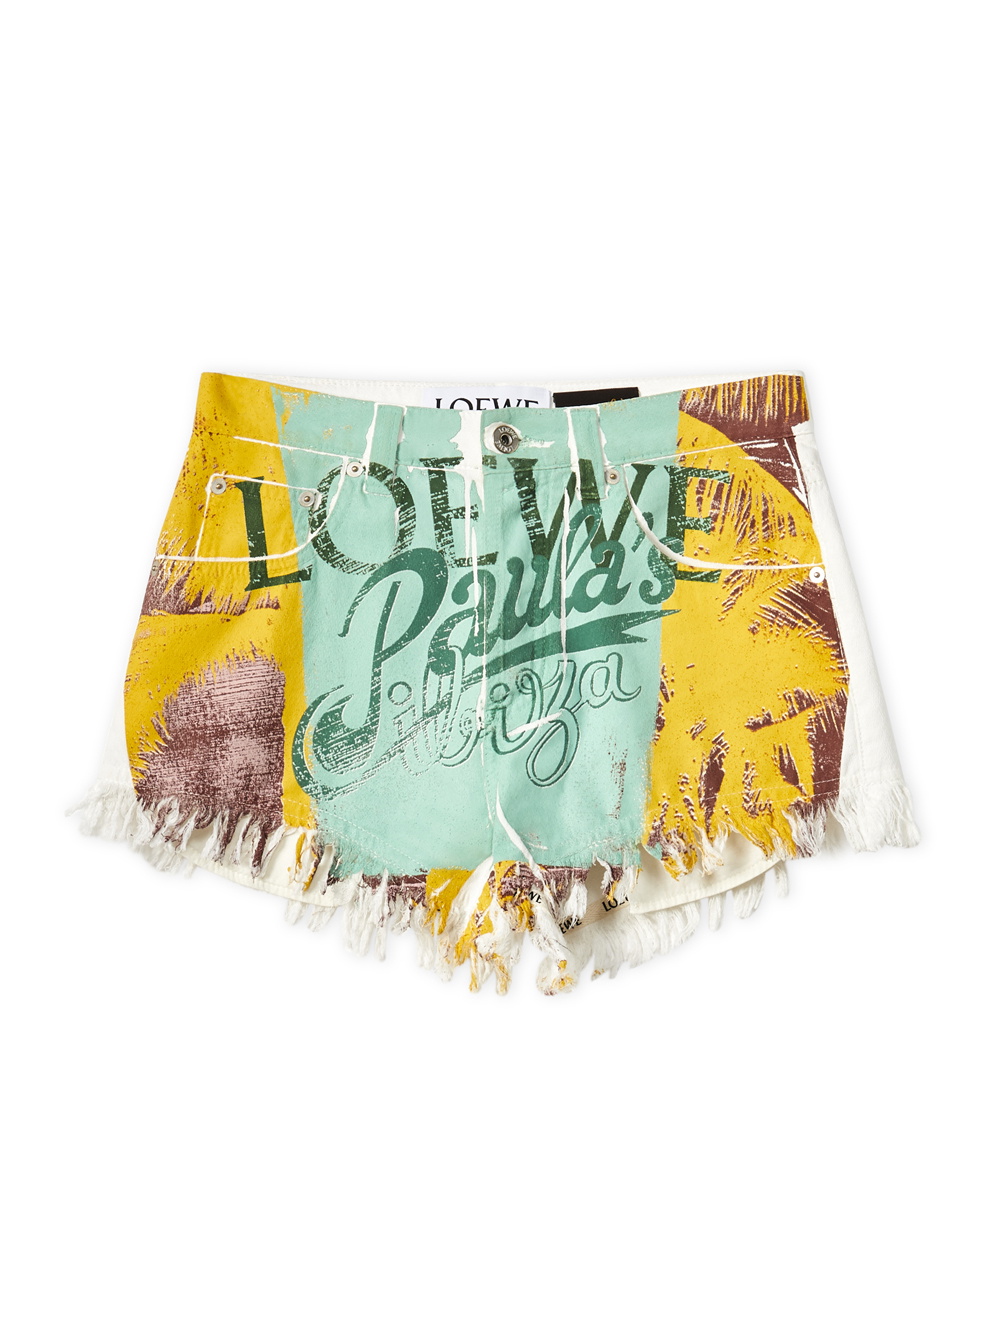 LOEWE PAULA'S IBIZA - Printed Denim Shorts